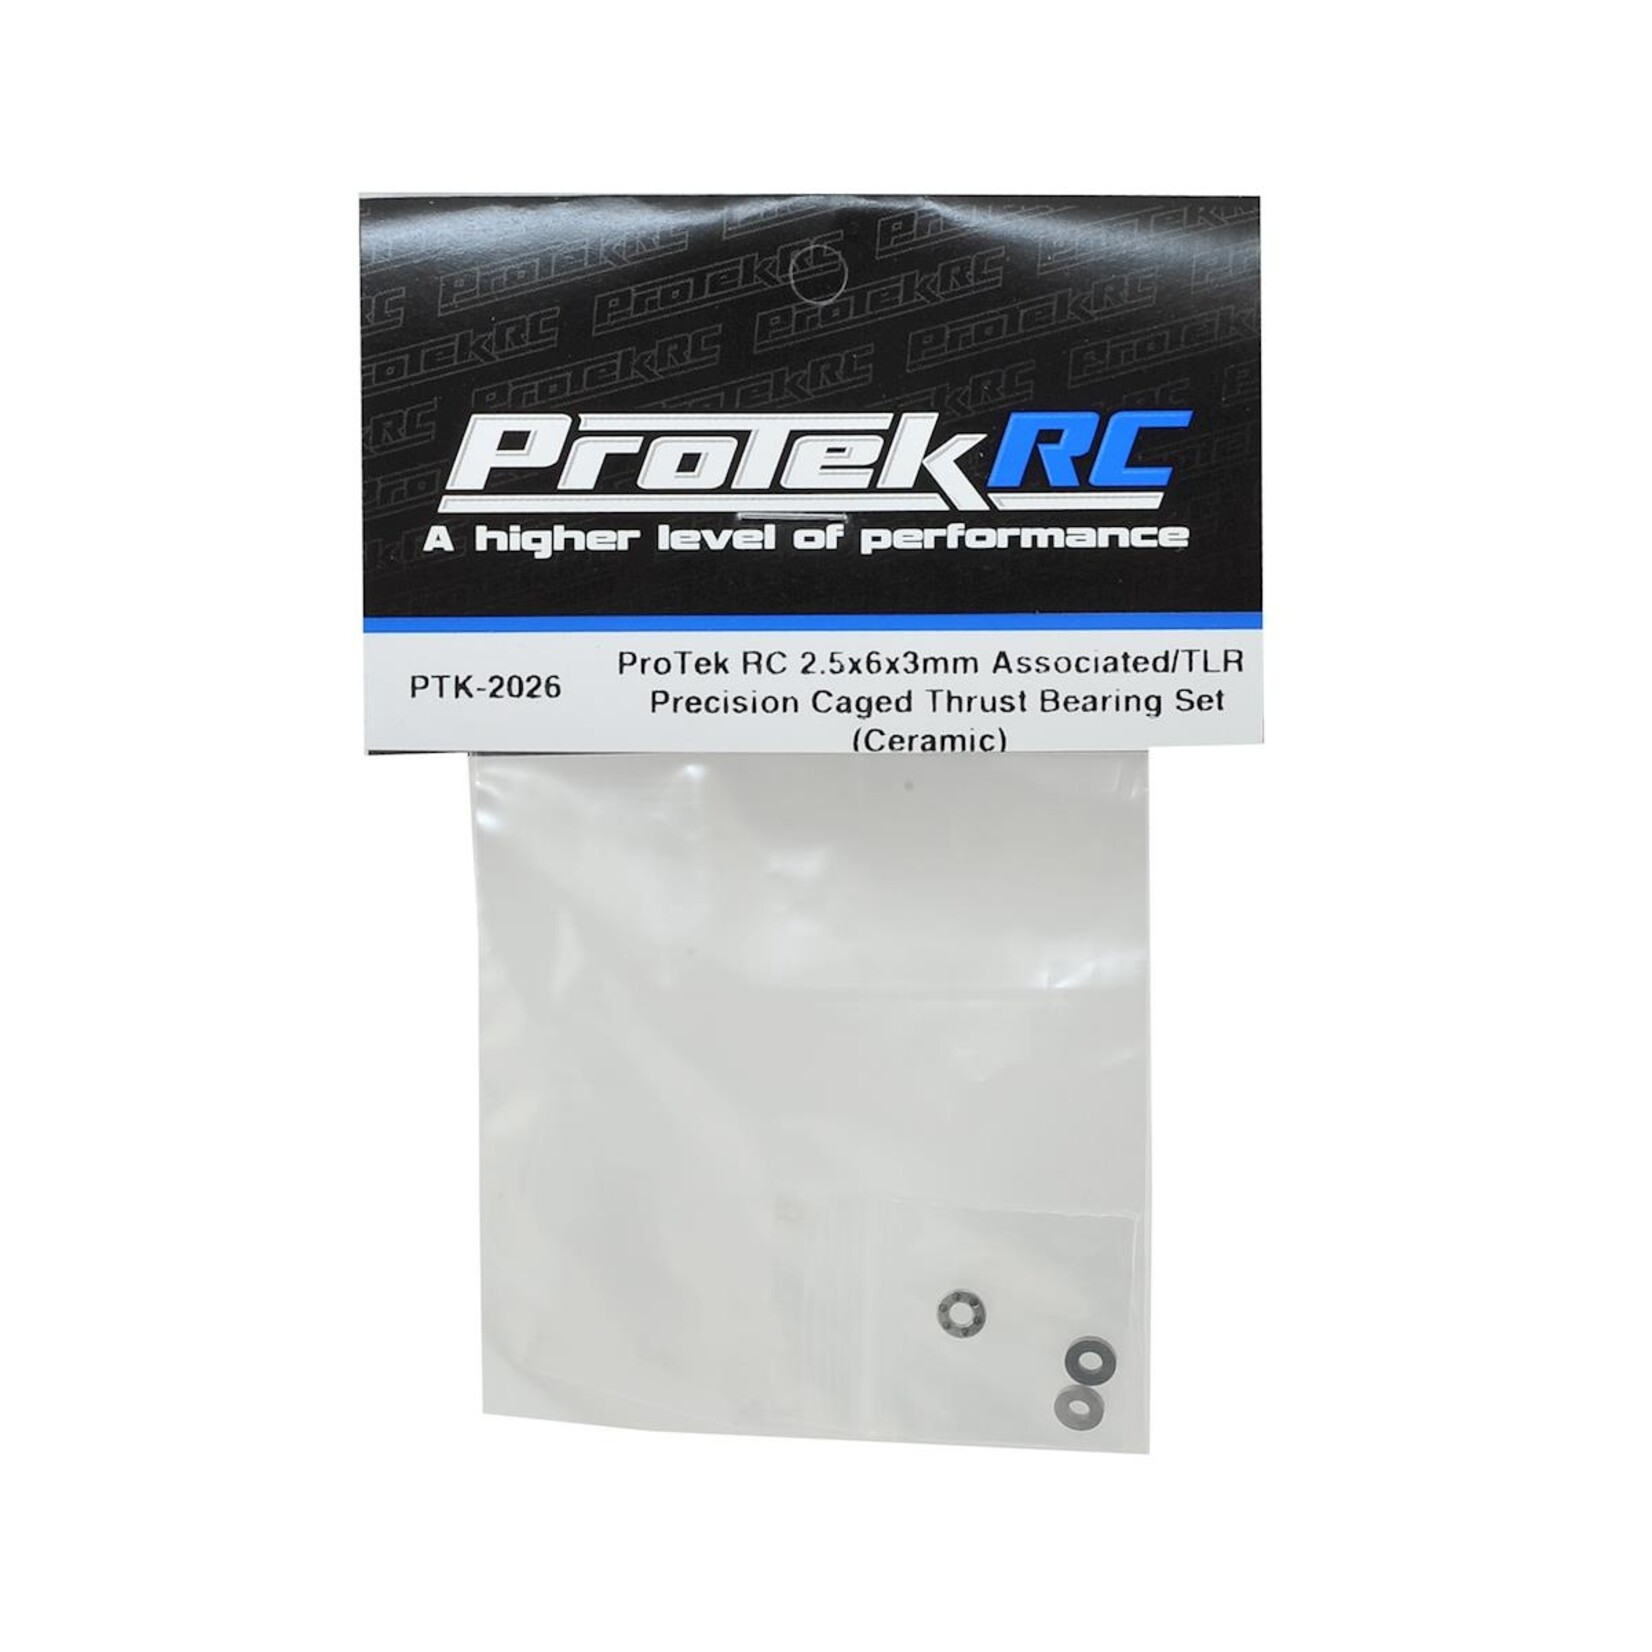 ProTek RC ProTek RC 2.5x6x3mm Associated/TLR Precision Caged Thrust Bearing Set (Ceramic) #PTK-2026